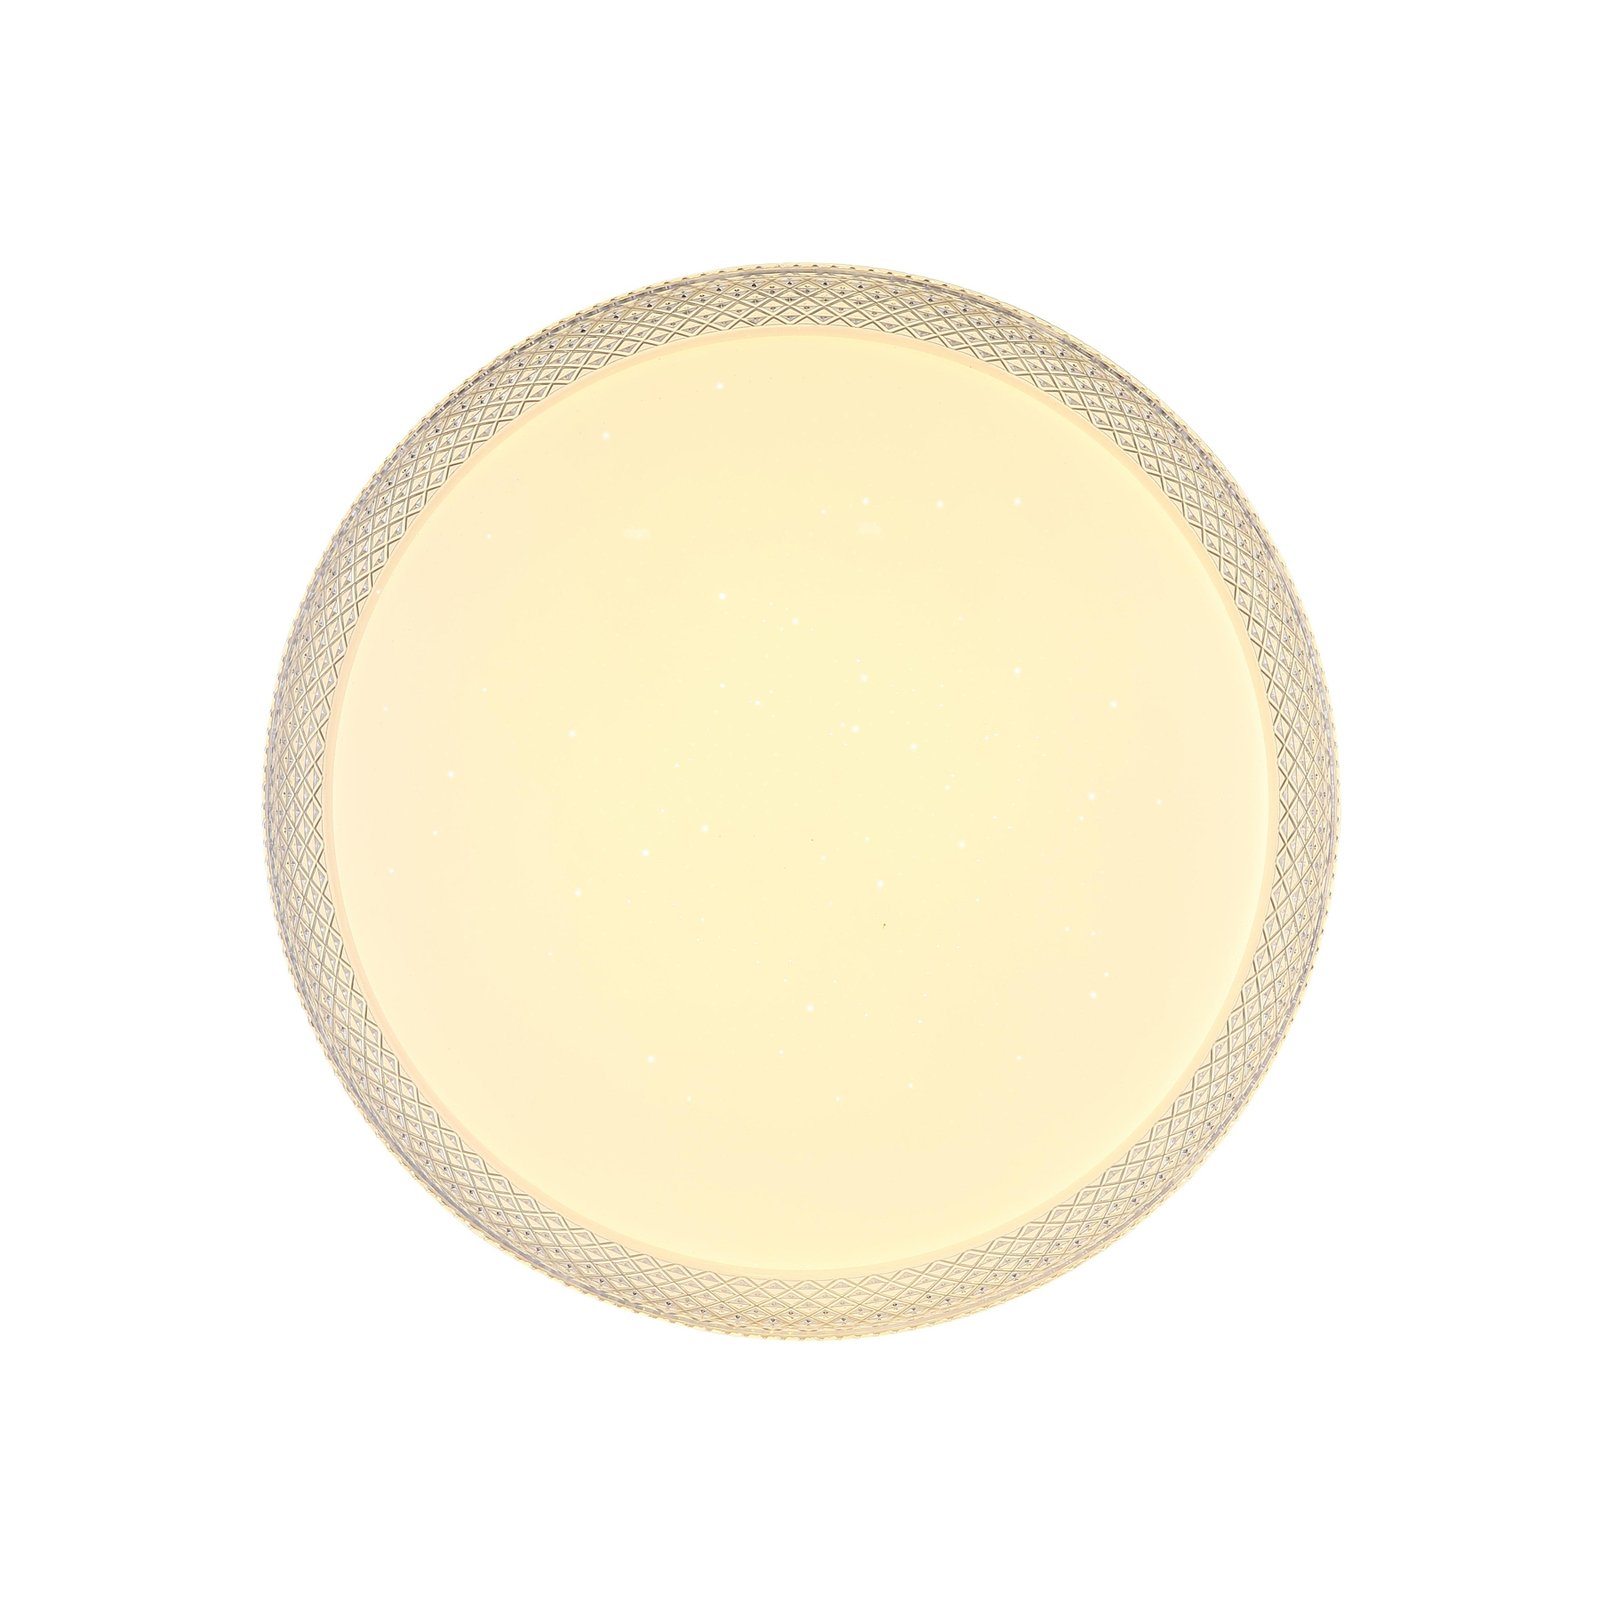 Stropné svietidlo Veleno LED, biele, Ø 49 cm, trblietavý efekt